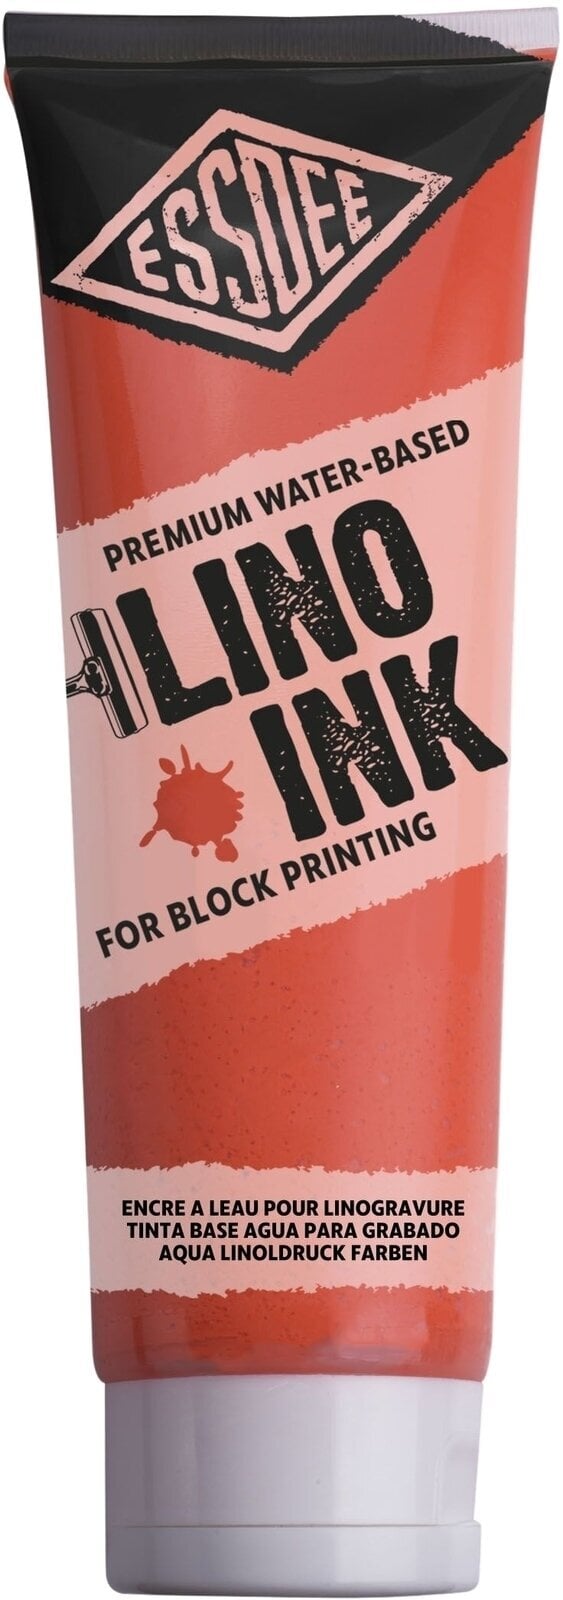 Farbe für Linolschnitt Essdee Block Printing Ink Farbe für Linolschnitt Fluorescent Orange 300 ml